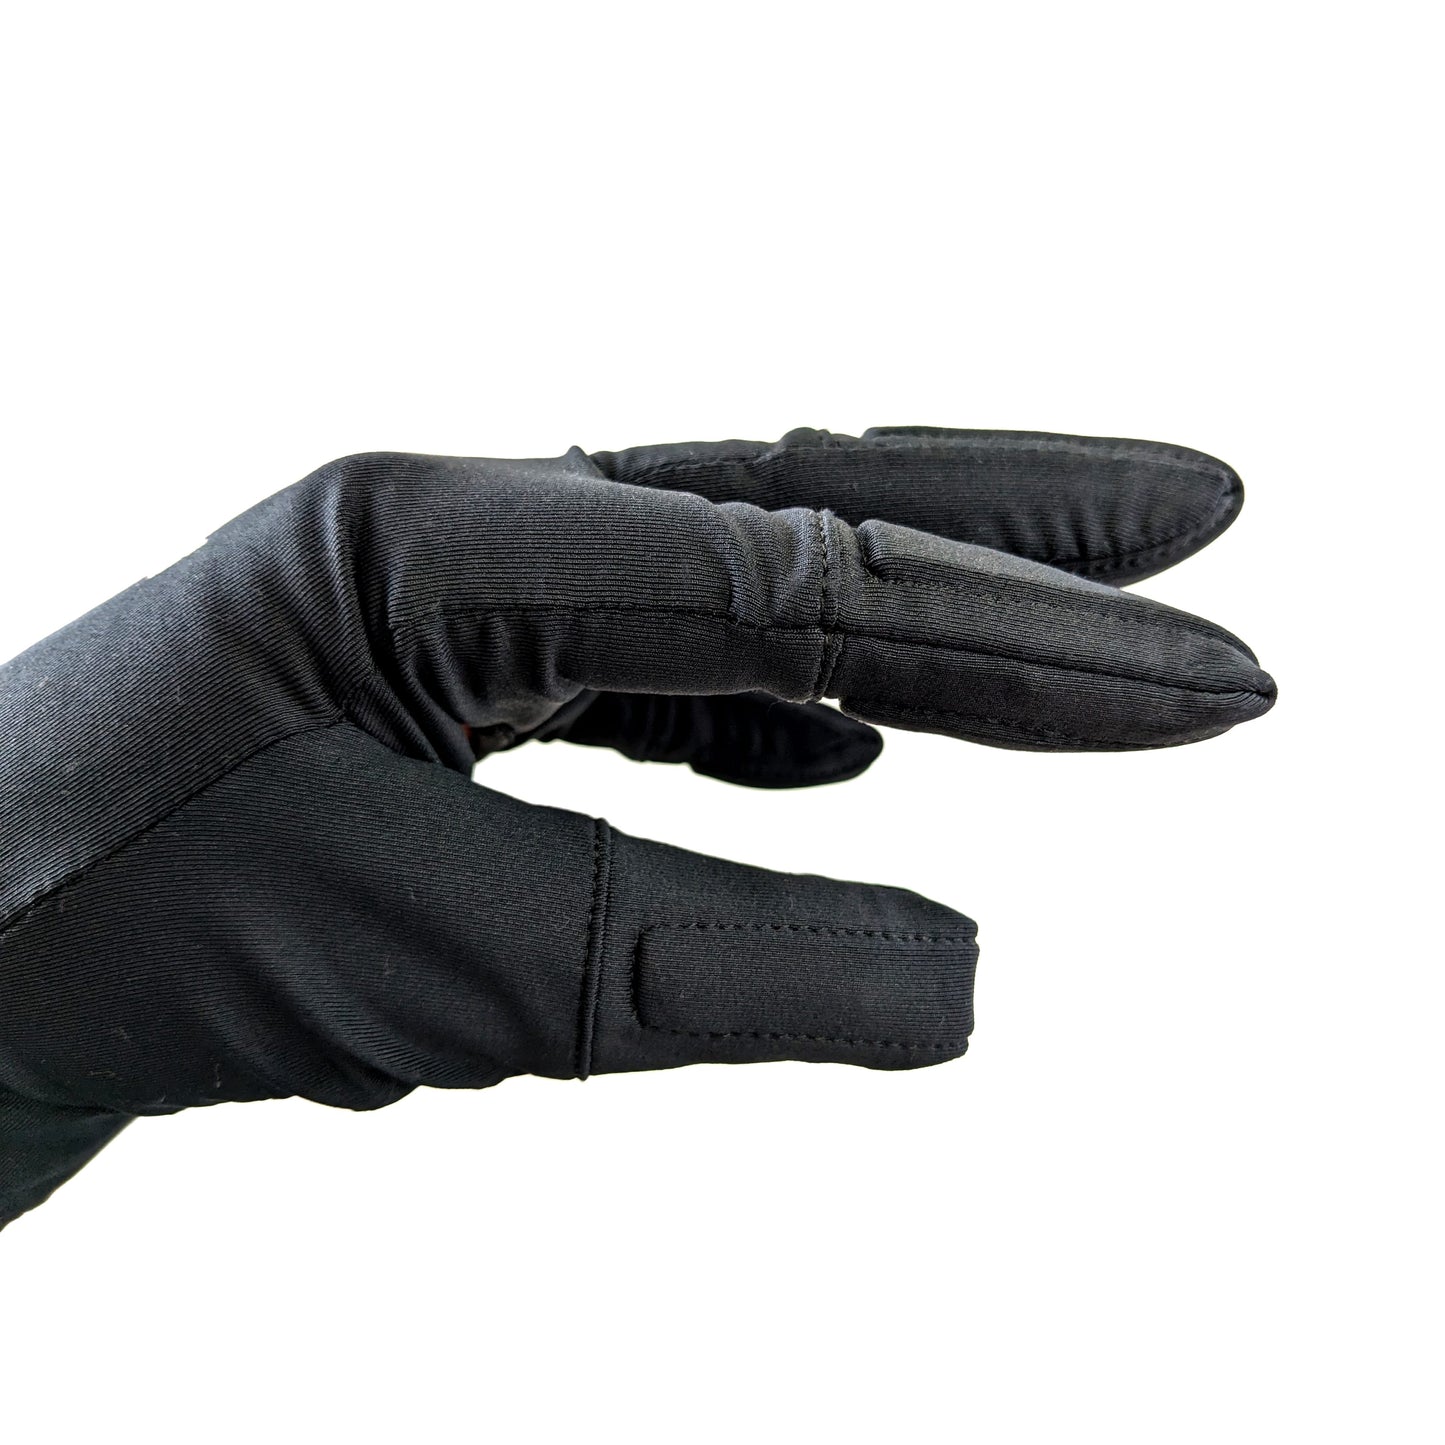 SPARS - SET OF TWO - Eye Pokes Prevention Gloves - UNISEX